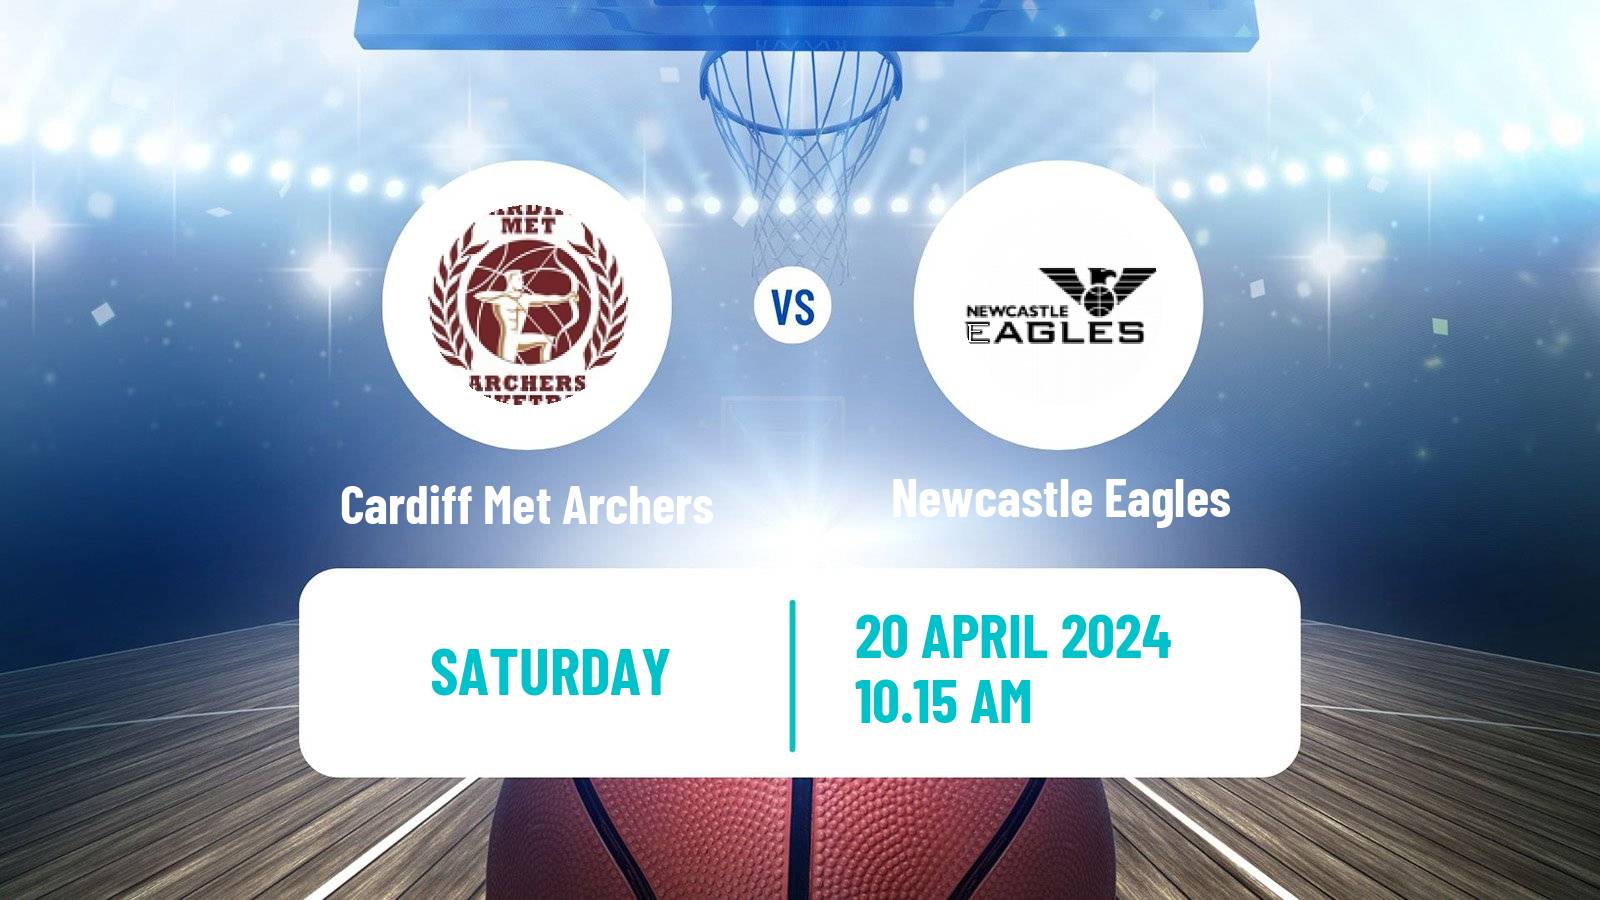 Basketball British WBBL Cardiff Met Archers - Newcastle Eagles